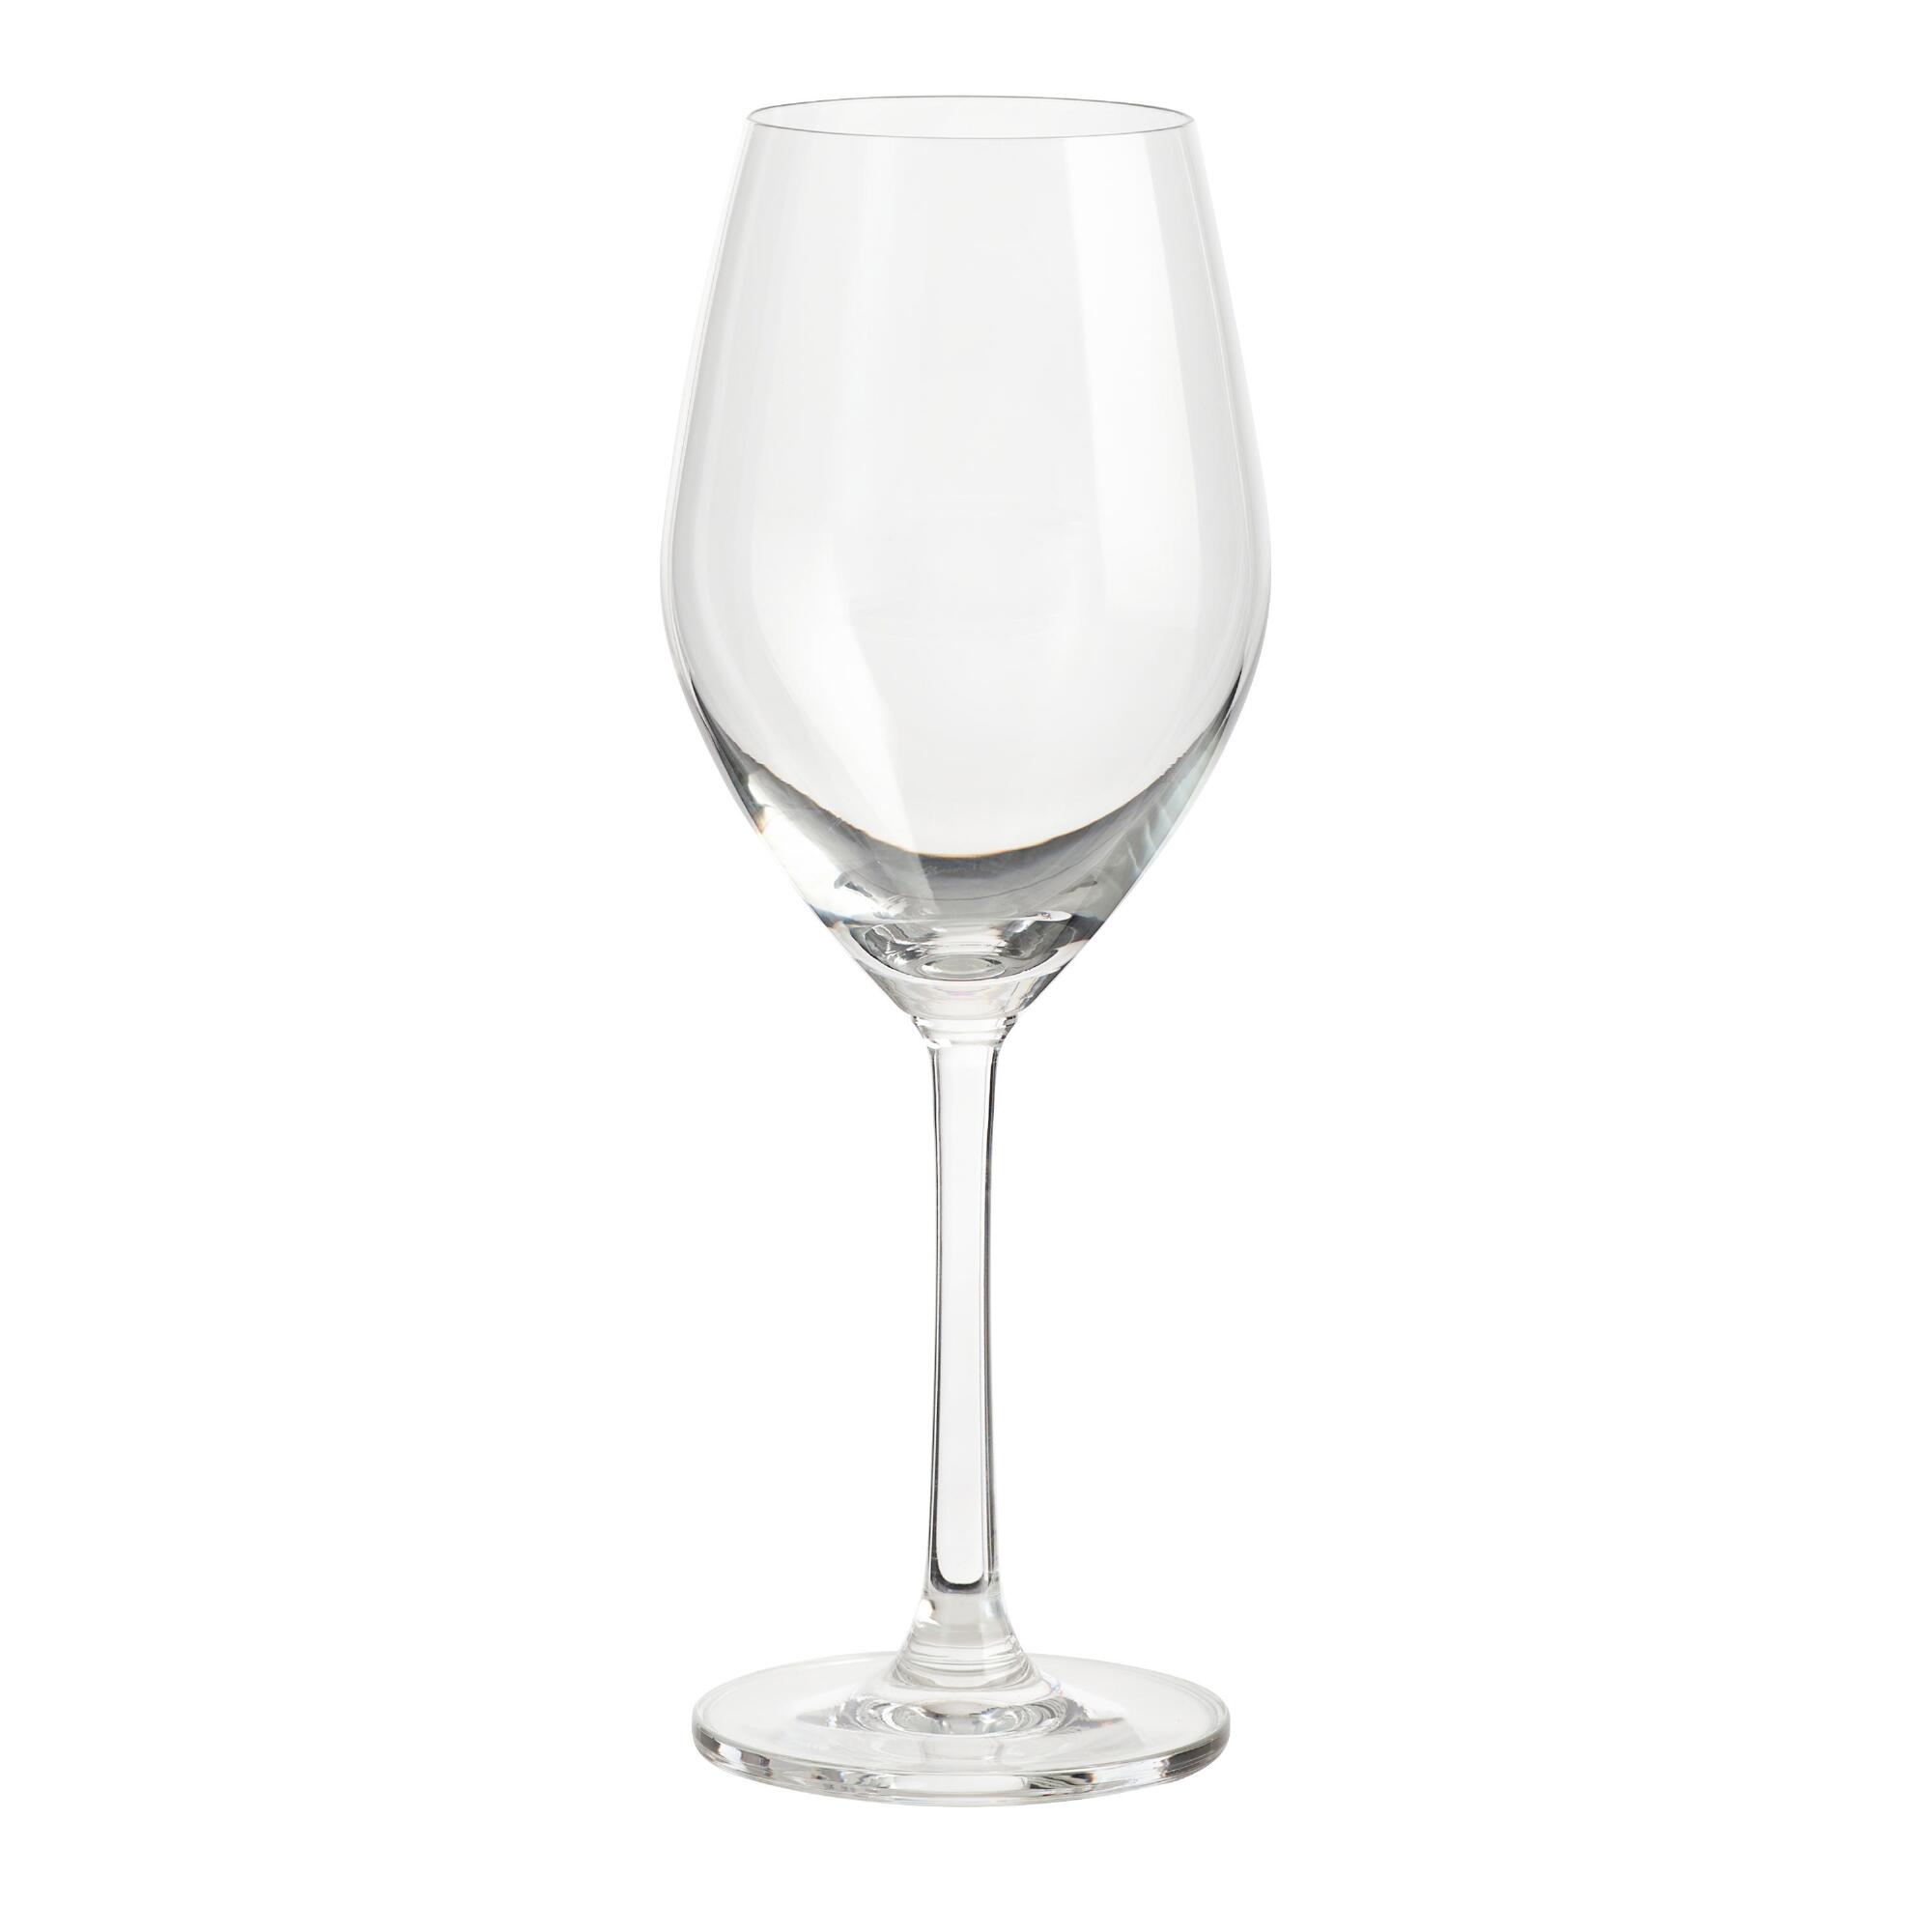 Sante White Wine Glasses Set of 6 by World Market